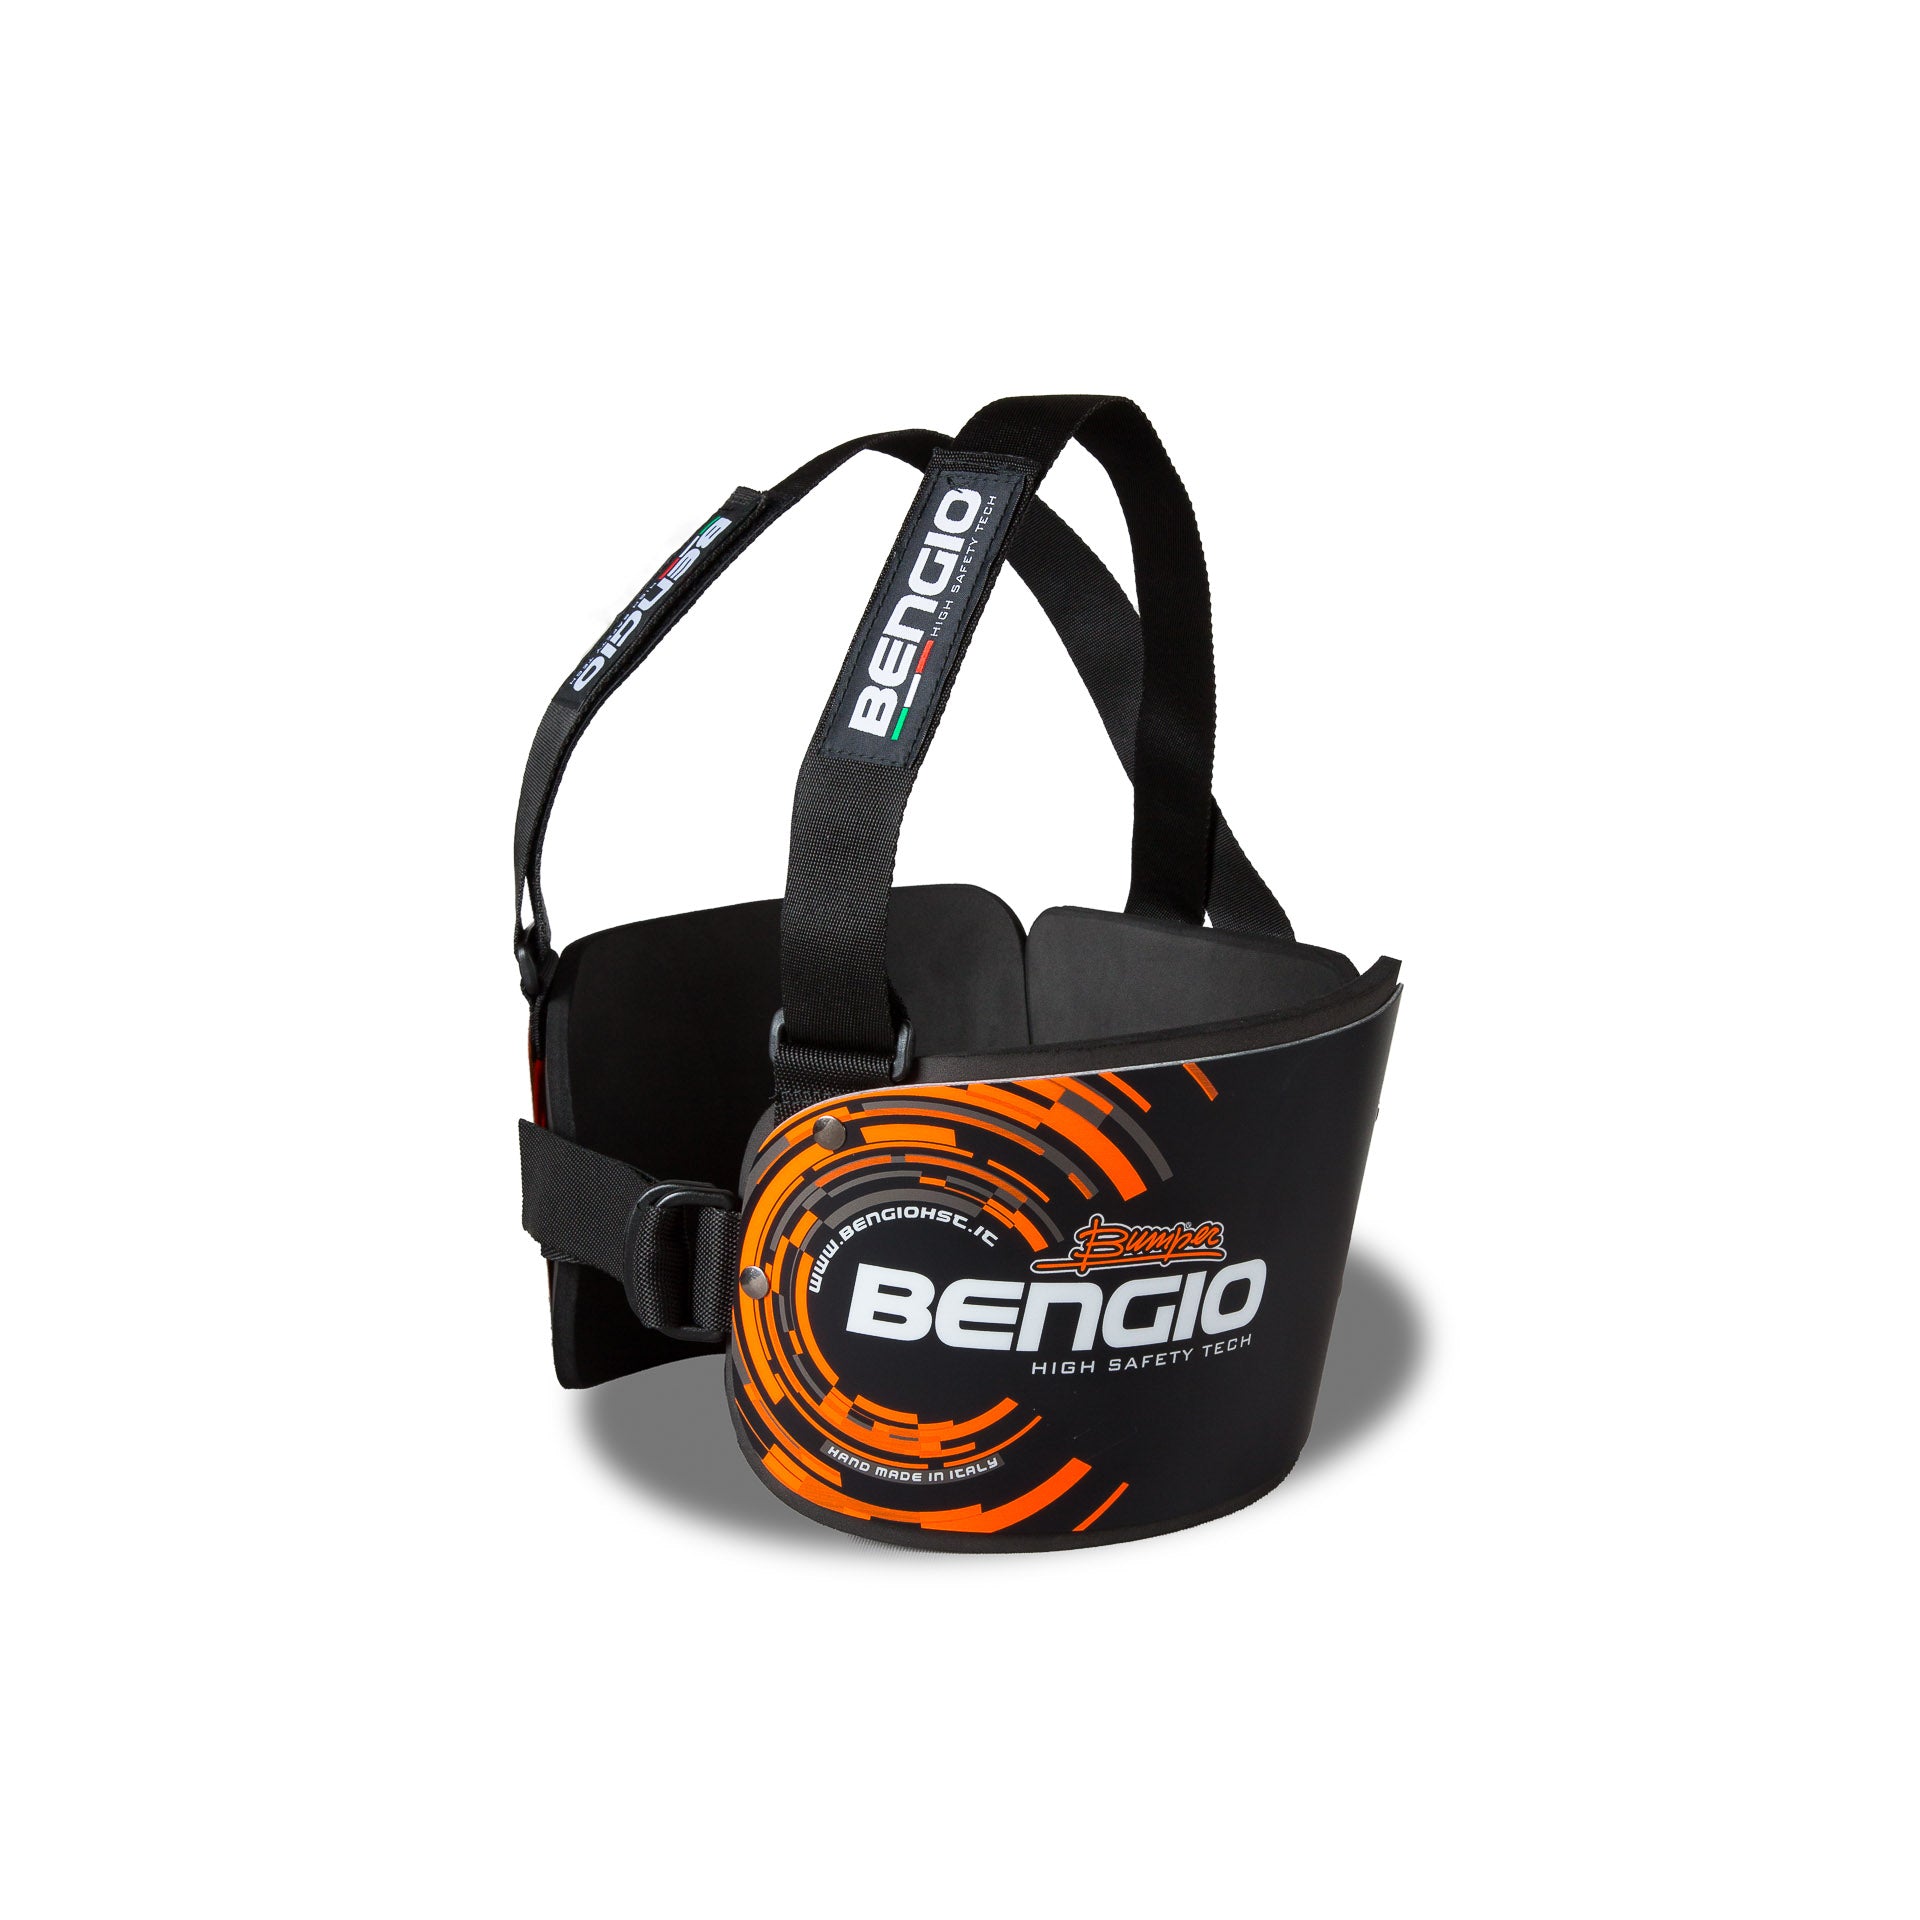 BENGIO STDXLBO BUMPER Standard Захист ребер для картингу, чорний/помаранчевий, розмір XL Photo-1 